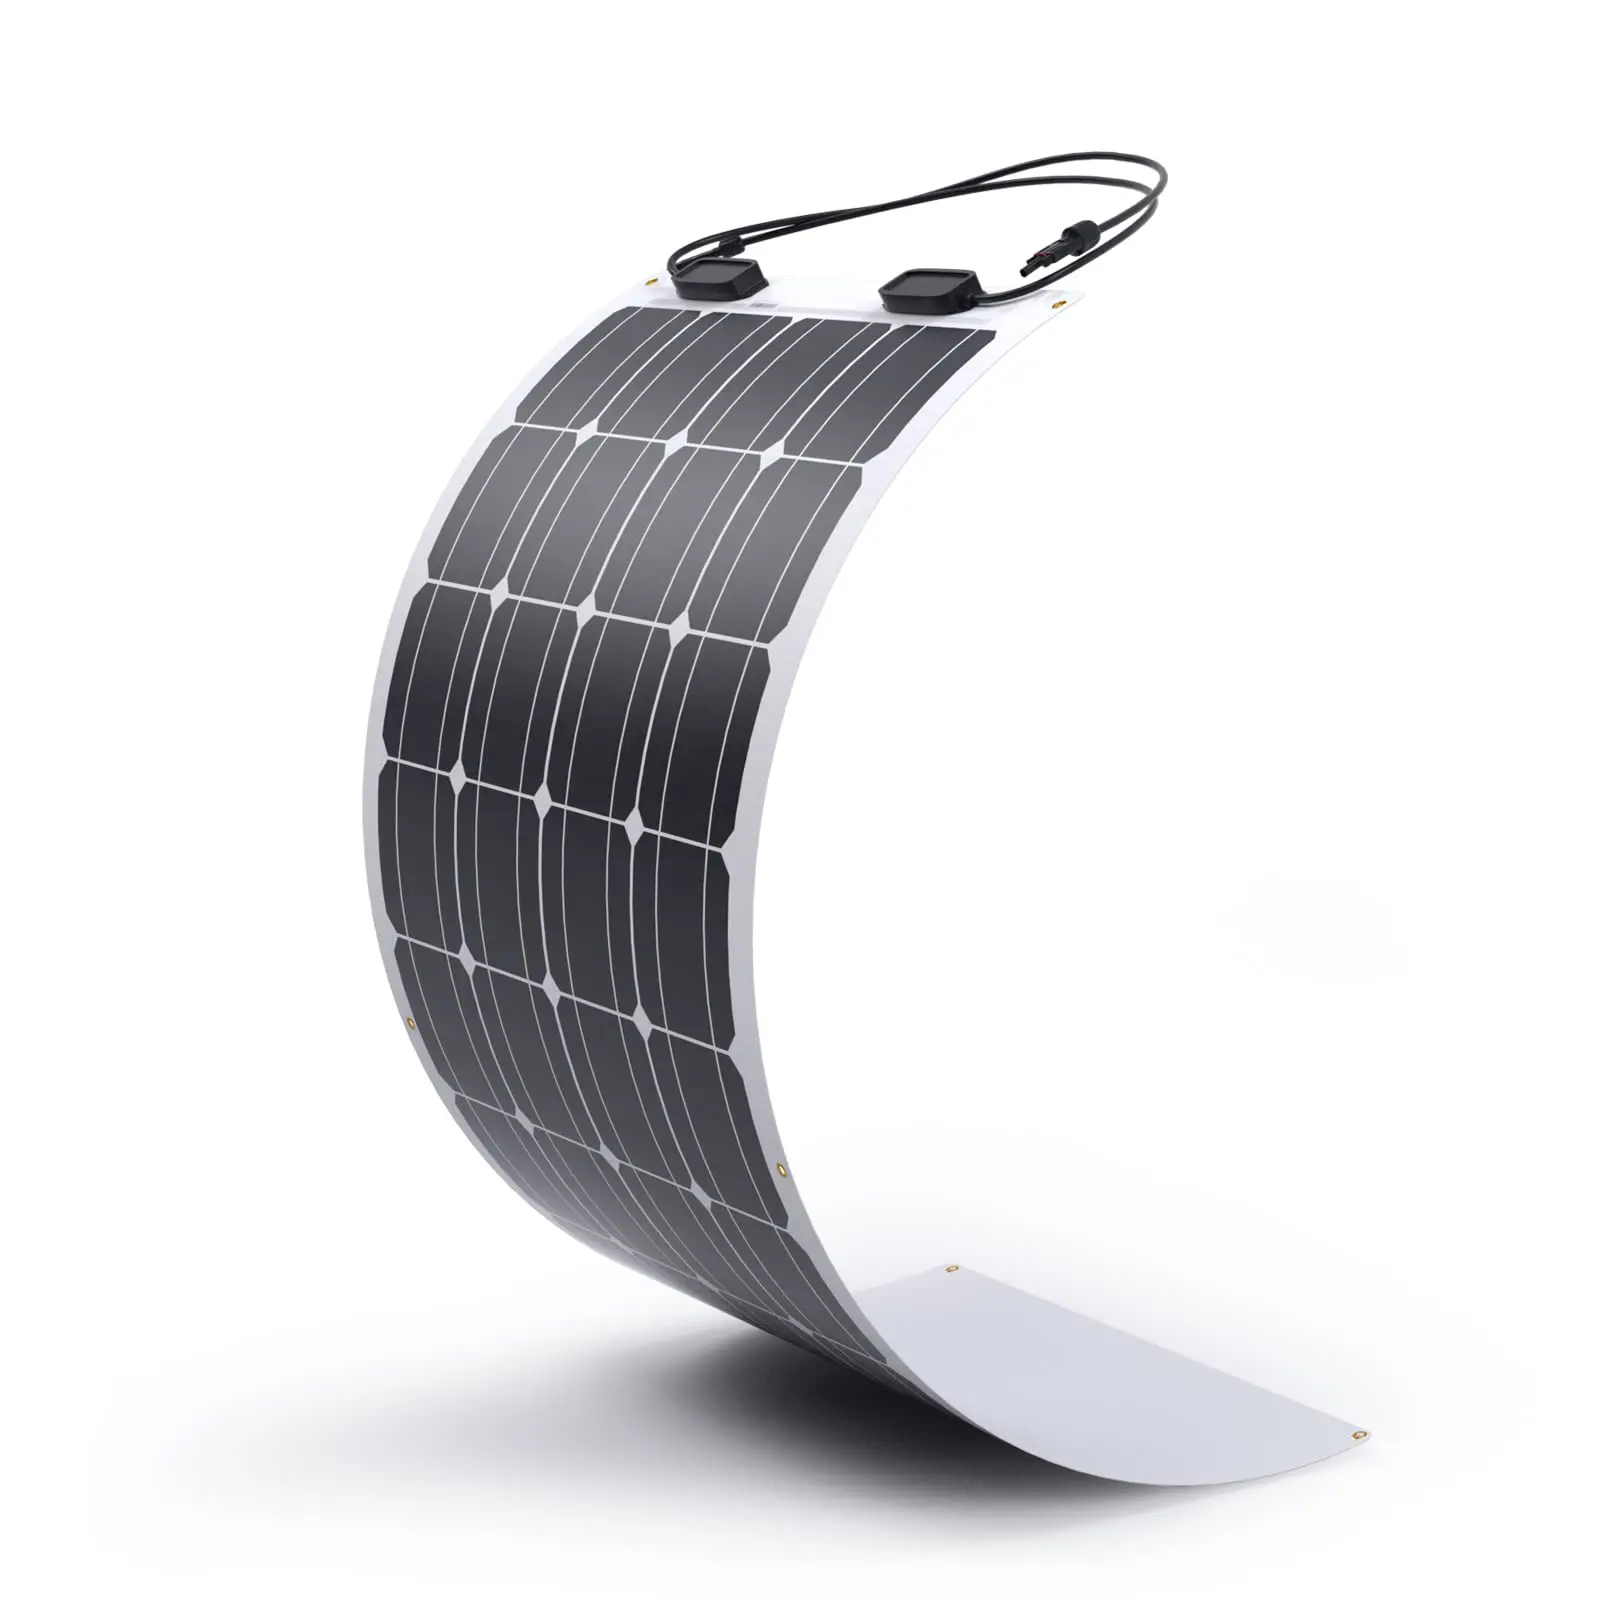 flex solar panels - Can you walk on a flexible solar panel